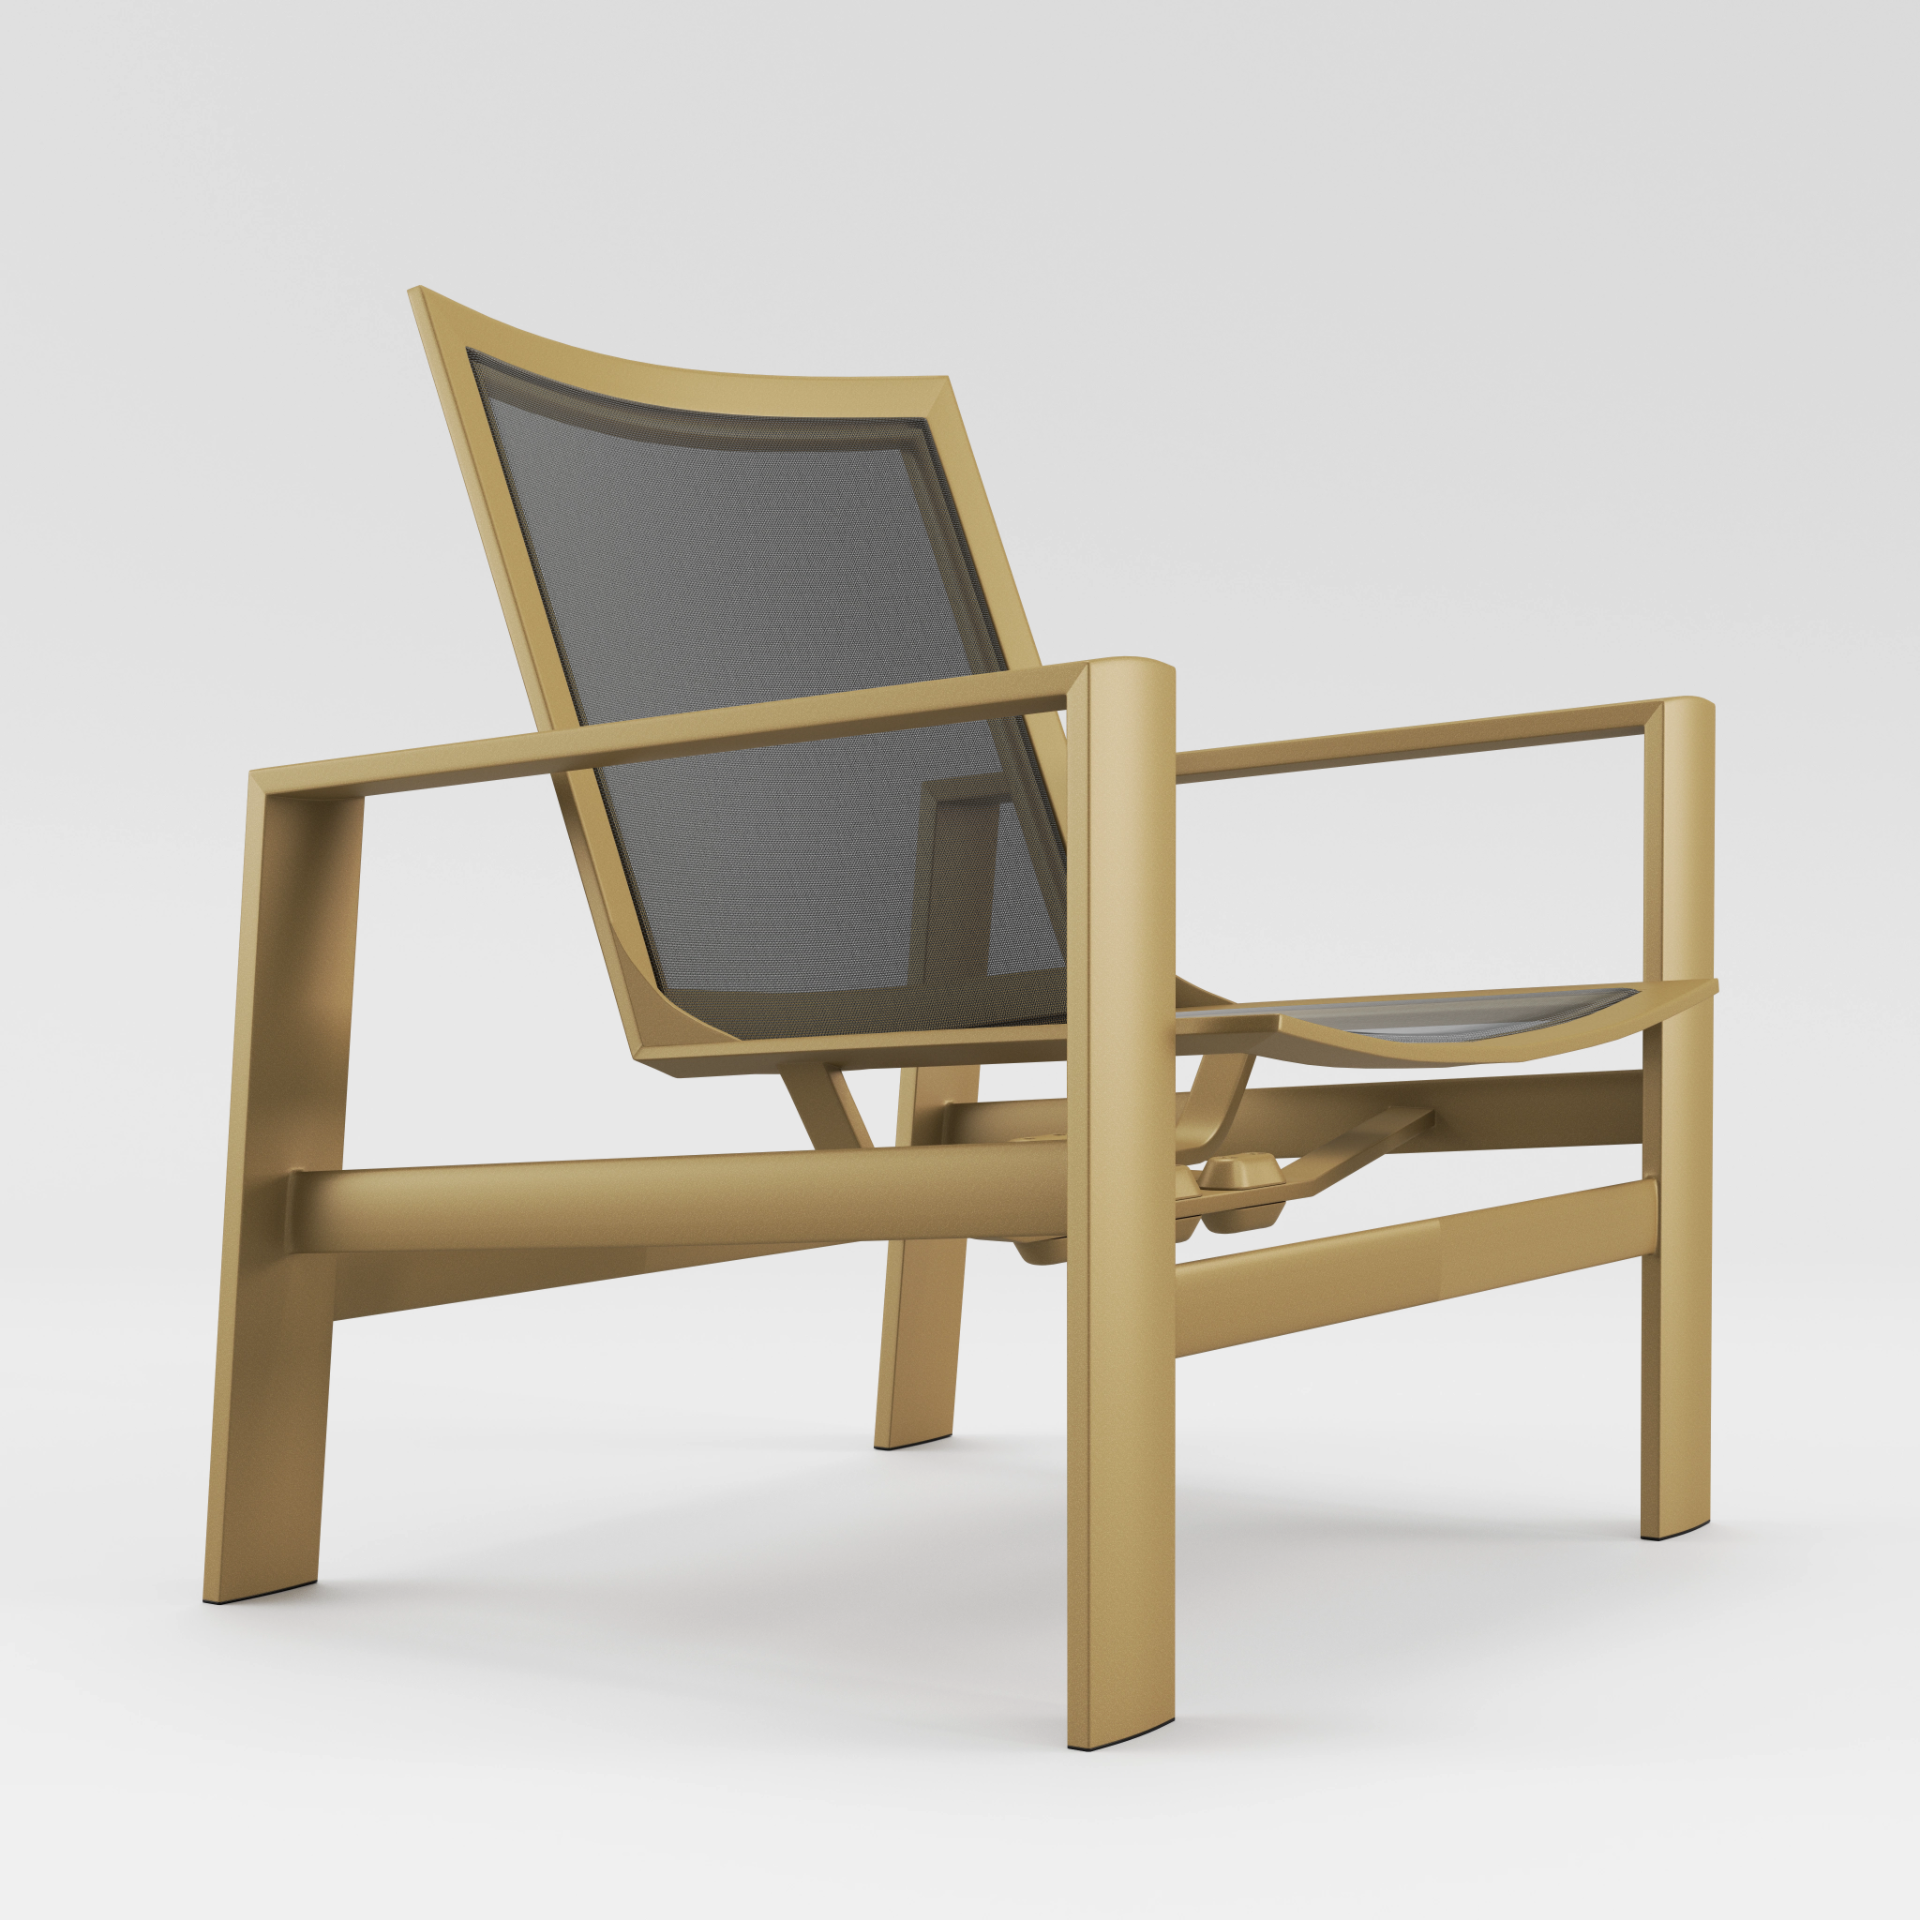 Parkway Flex Sling Motion Lounge Chair by Brown Jordan